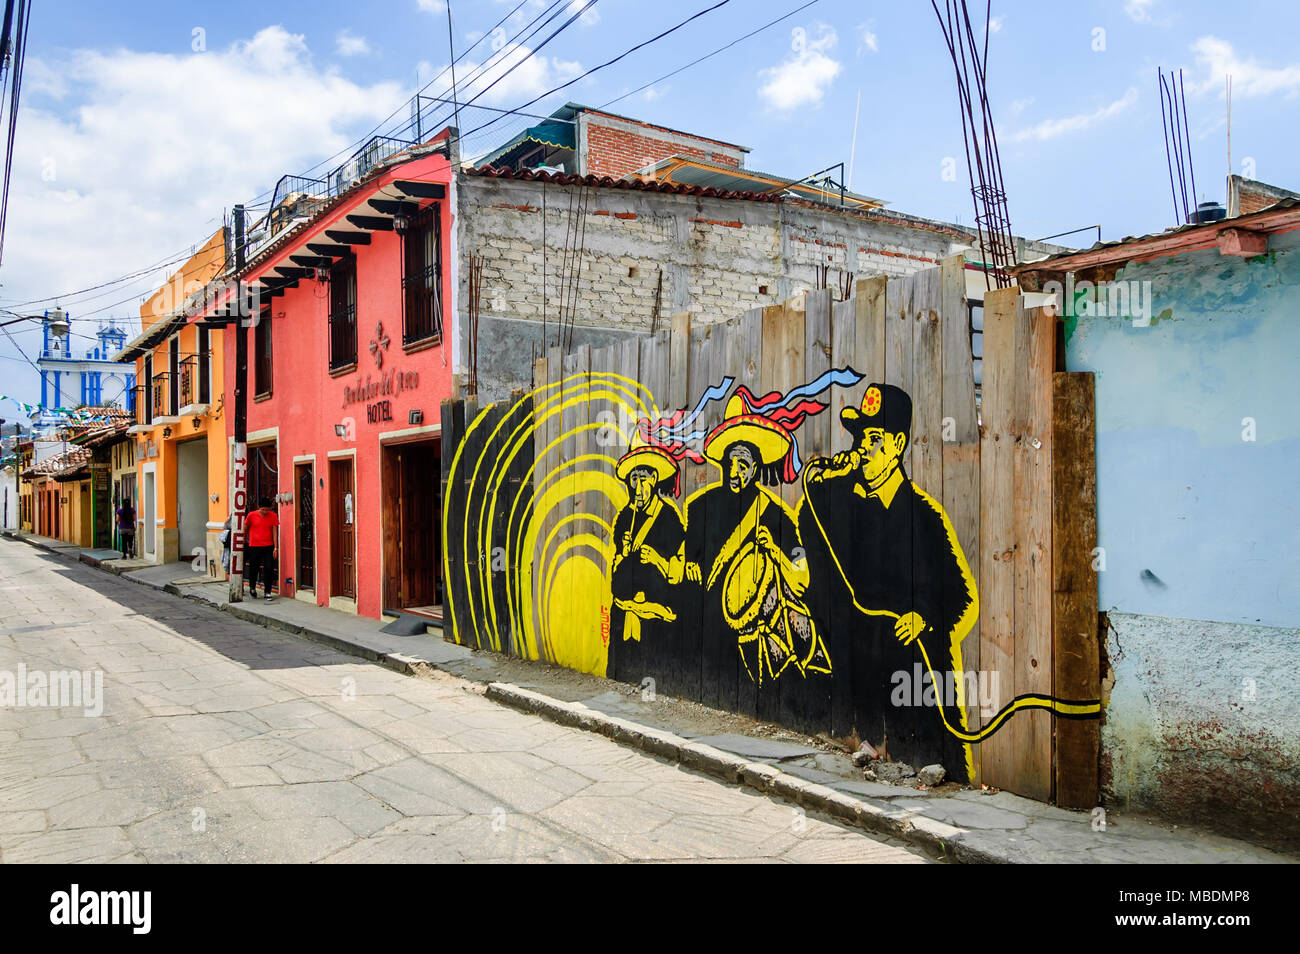 San Cristobal de las Casas, Mexico - March 26, 2015: Street scene with street art on wooden fence Stock Photo